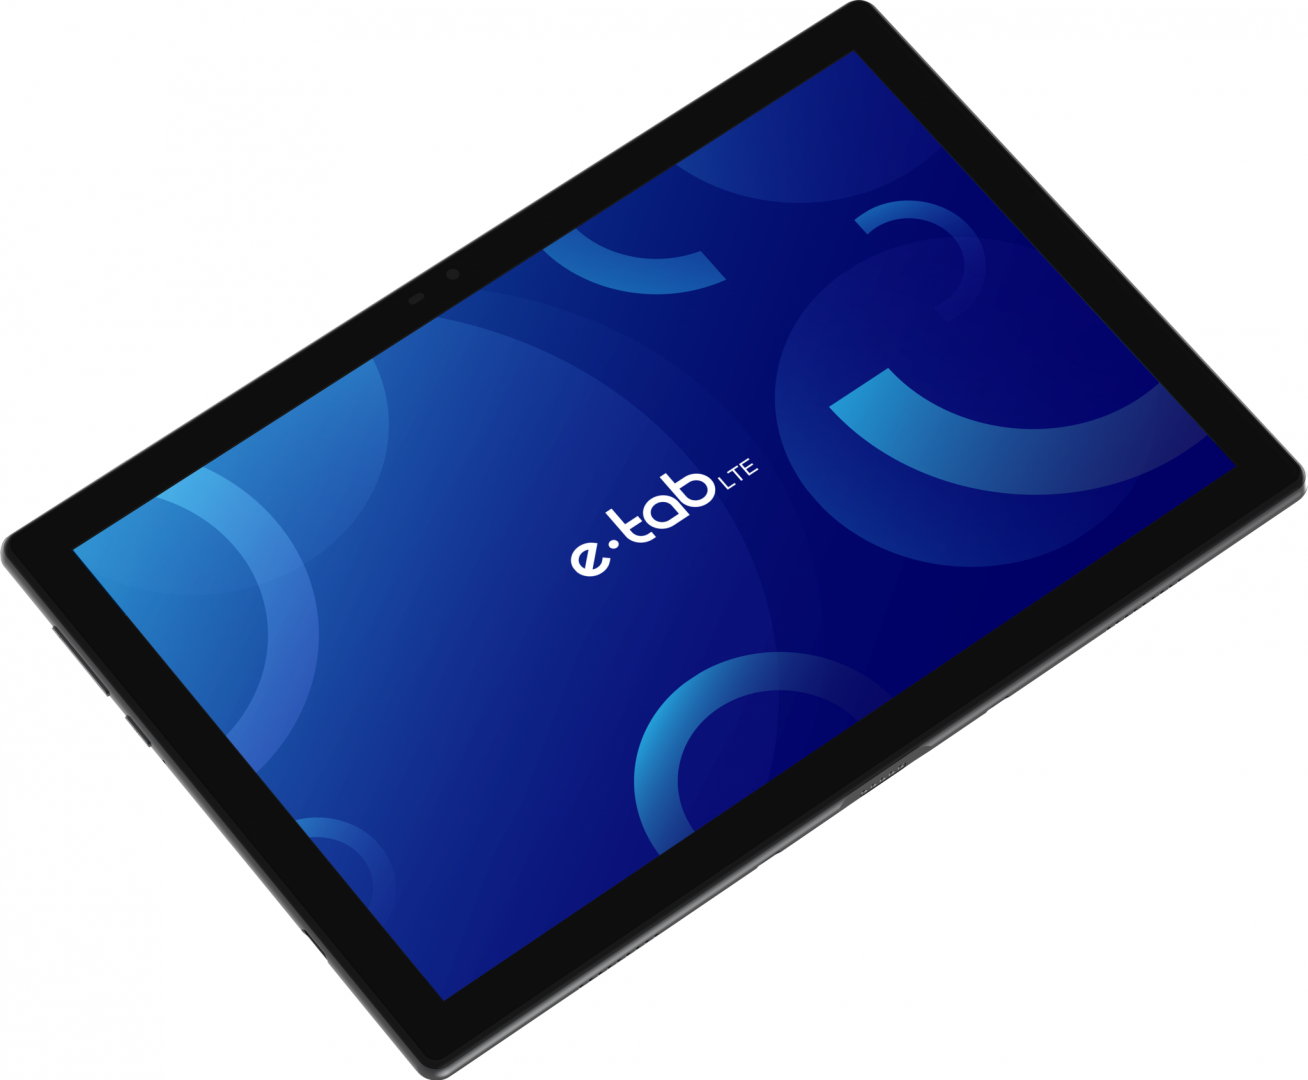 Microtech Tableta e-tab LTE 3, Display: 10.1